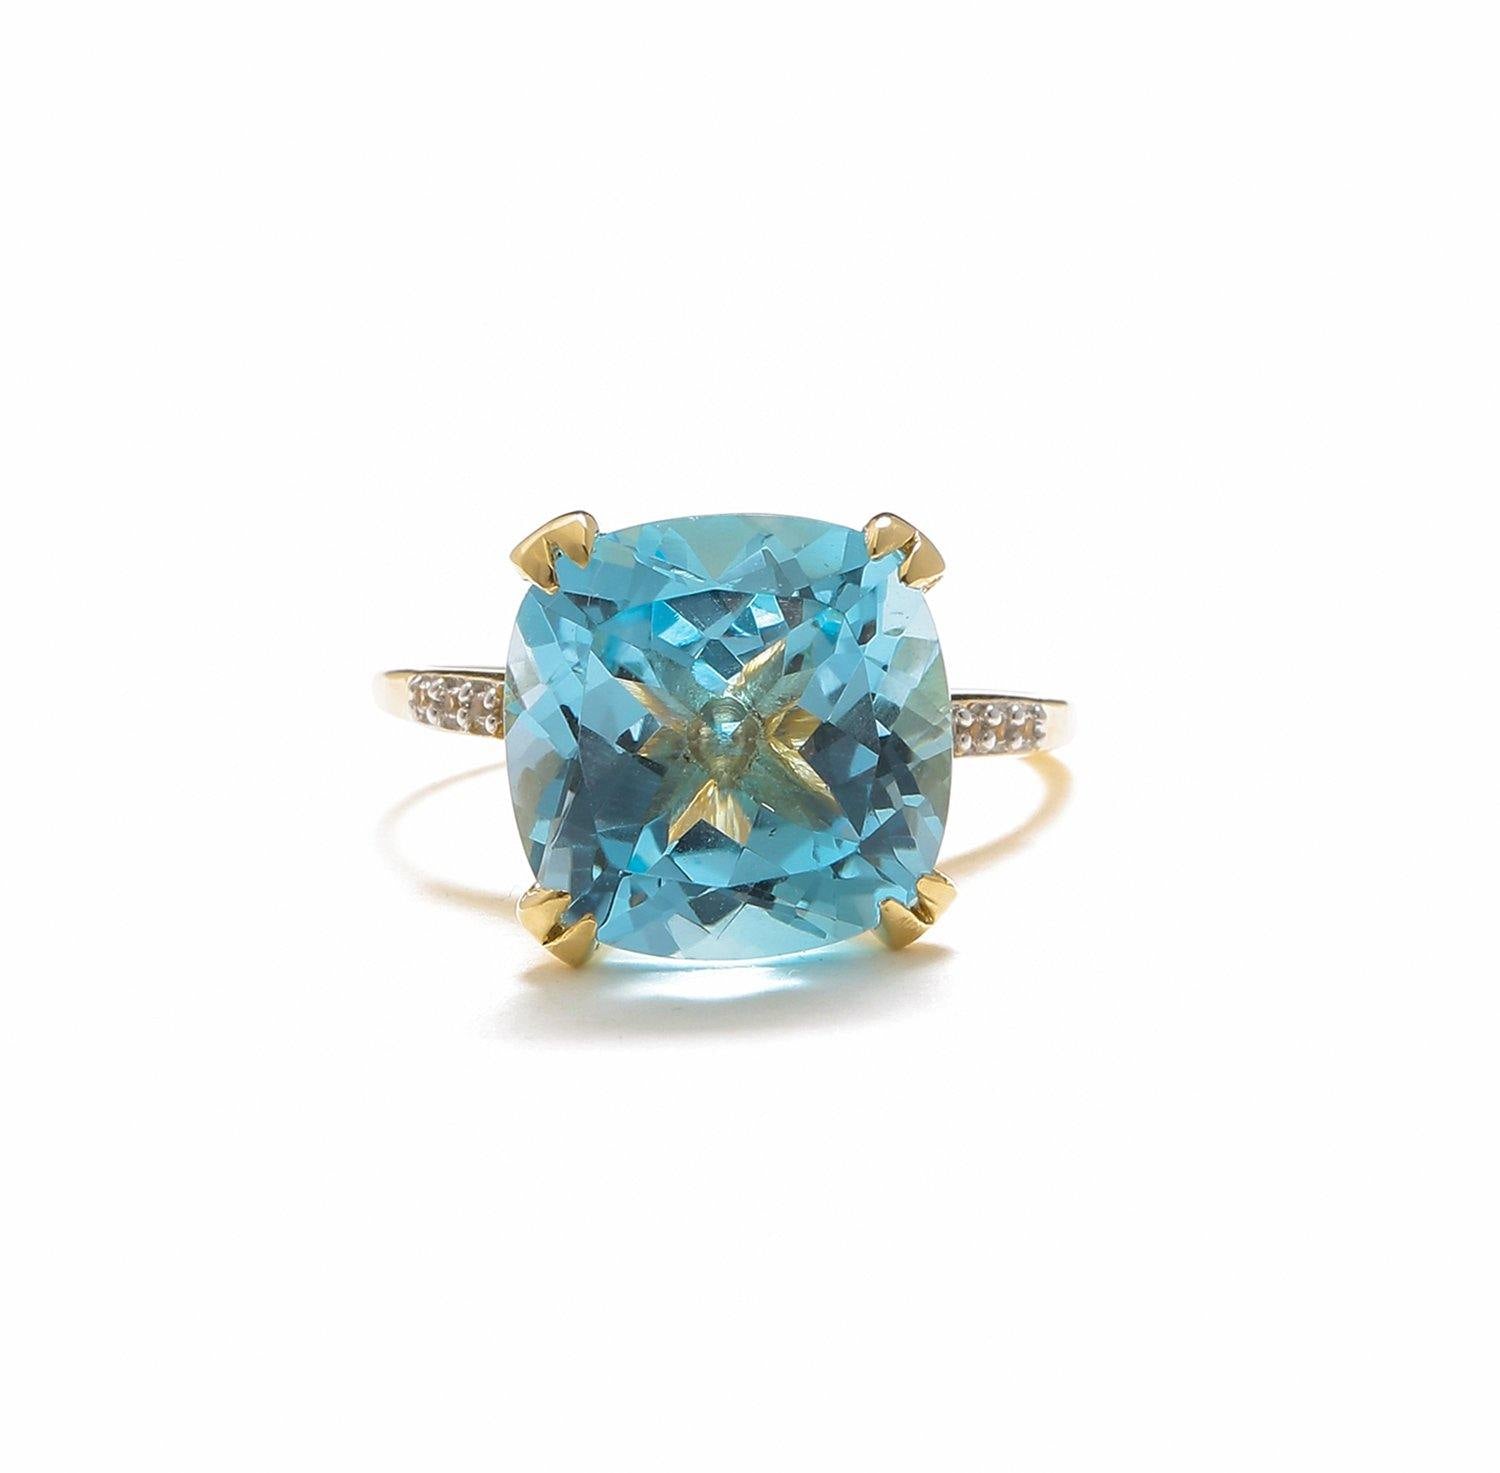 8.73 Ct Sky Blue Topaz Solid 10k Yellow Gold Statement Ring Jewelry - YoTreasure